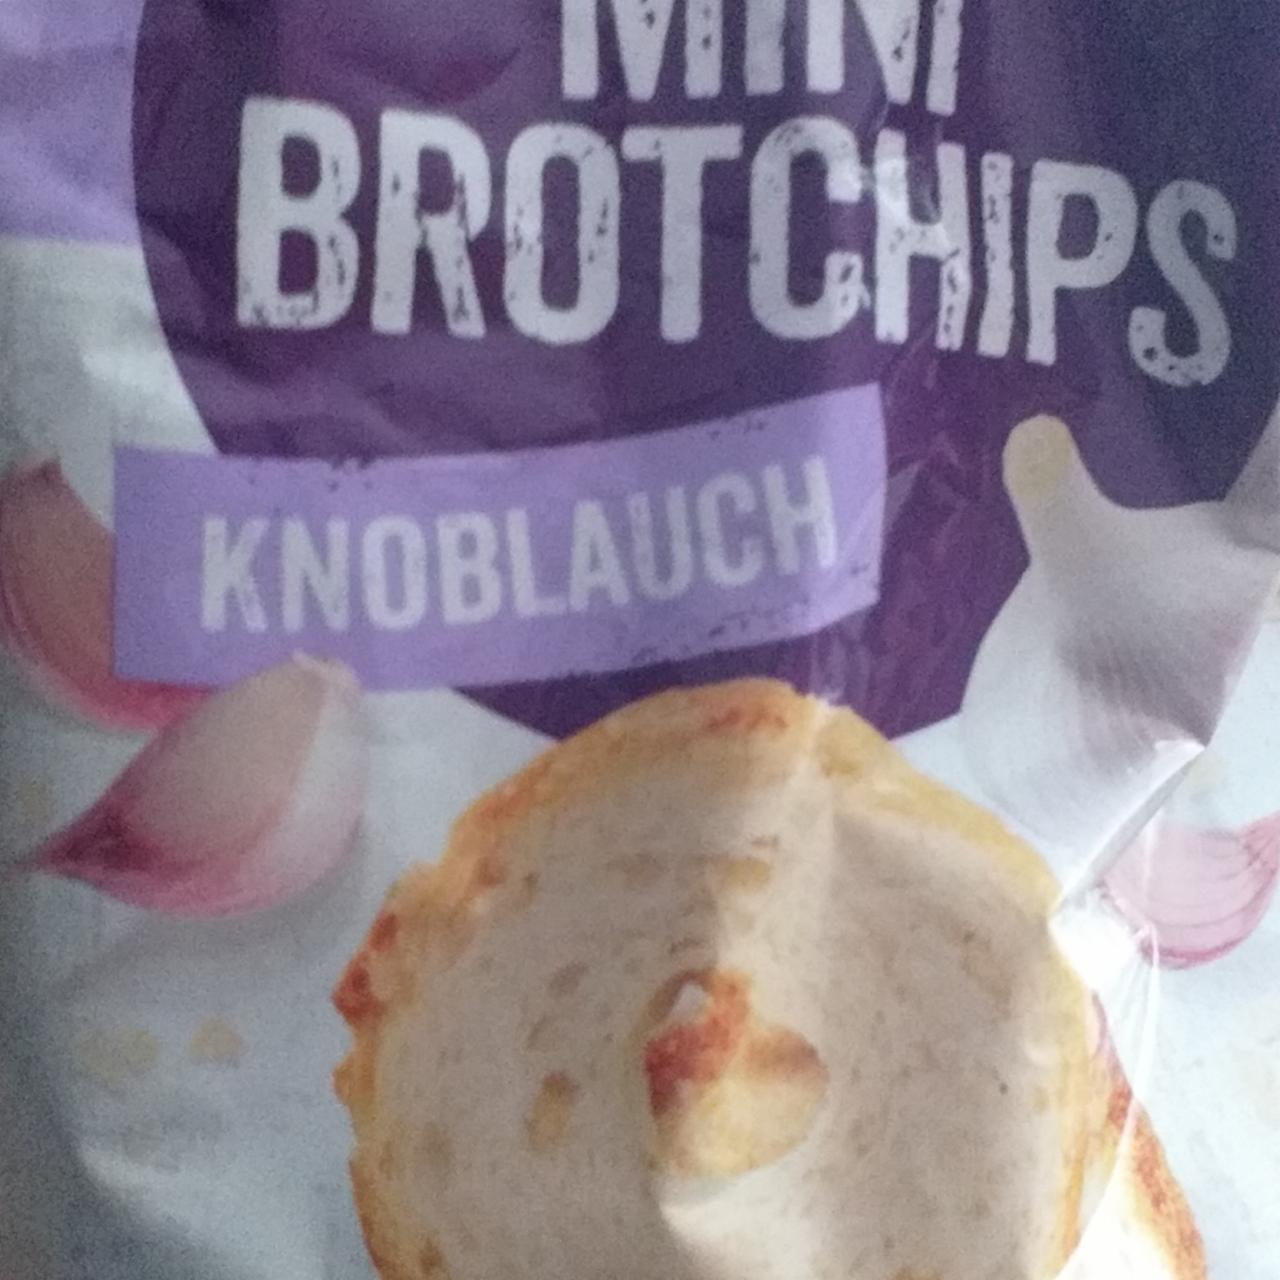 Mini Brotchips Snacks nutriční Sun hodnoty kalorie, - a kJ Knoblauch